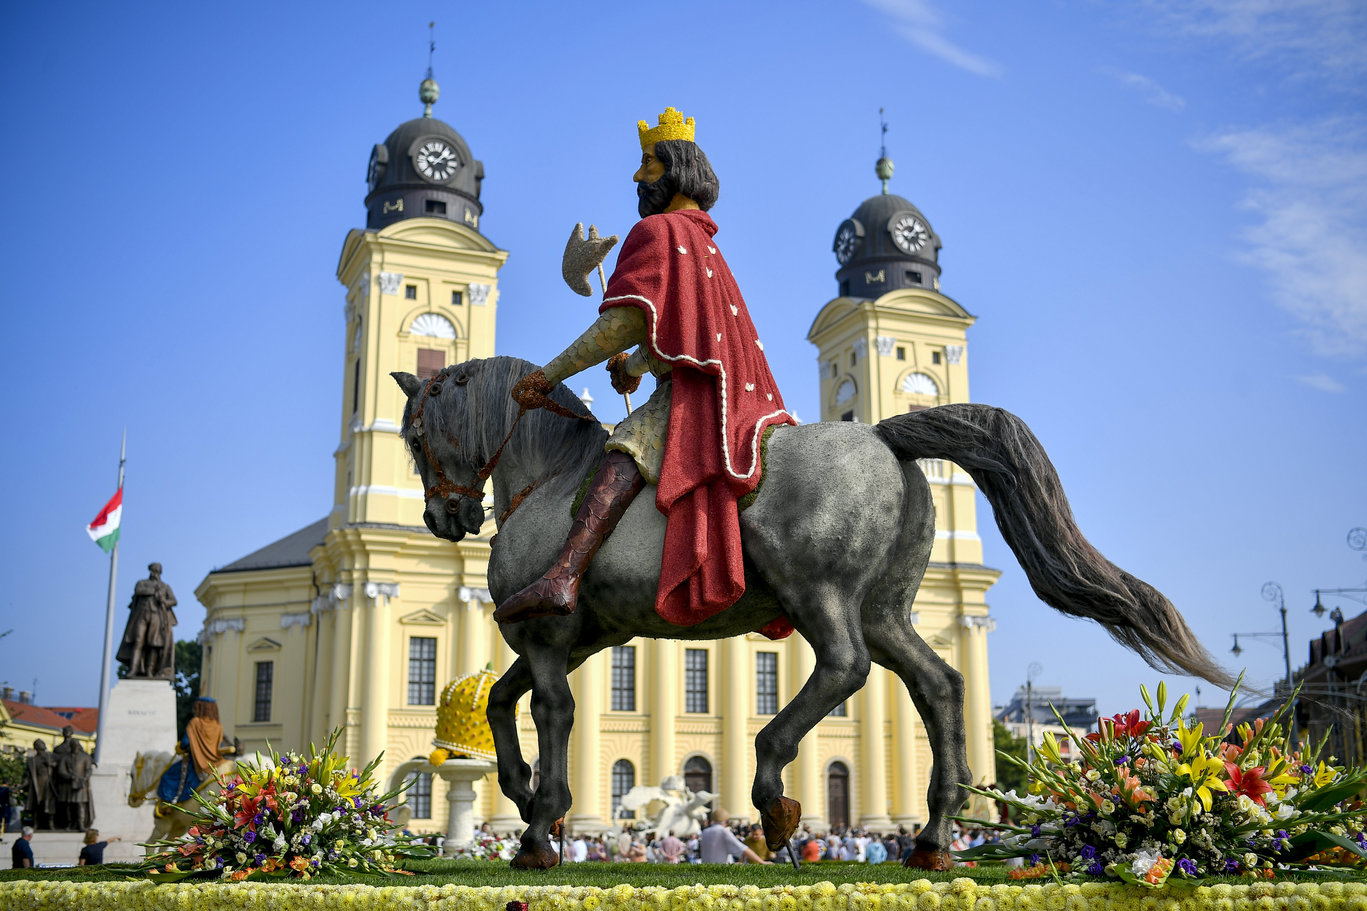 Carnaval des fleurs de Debrecen